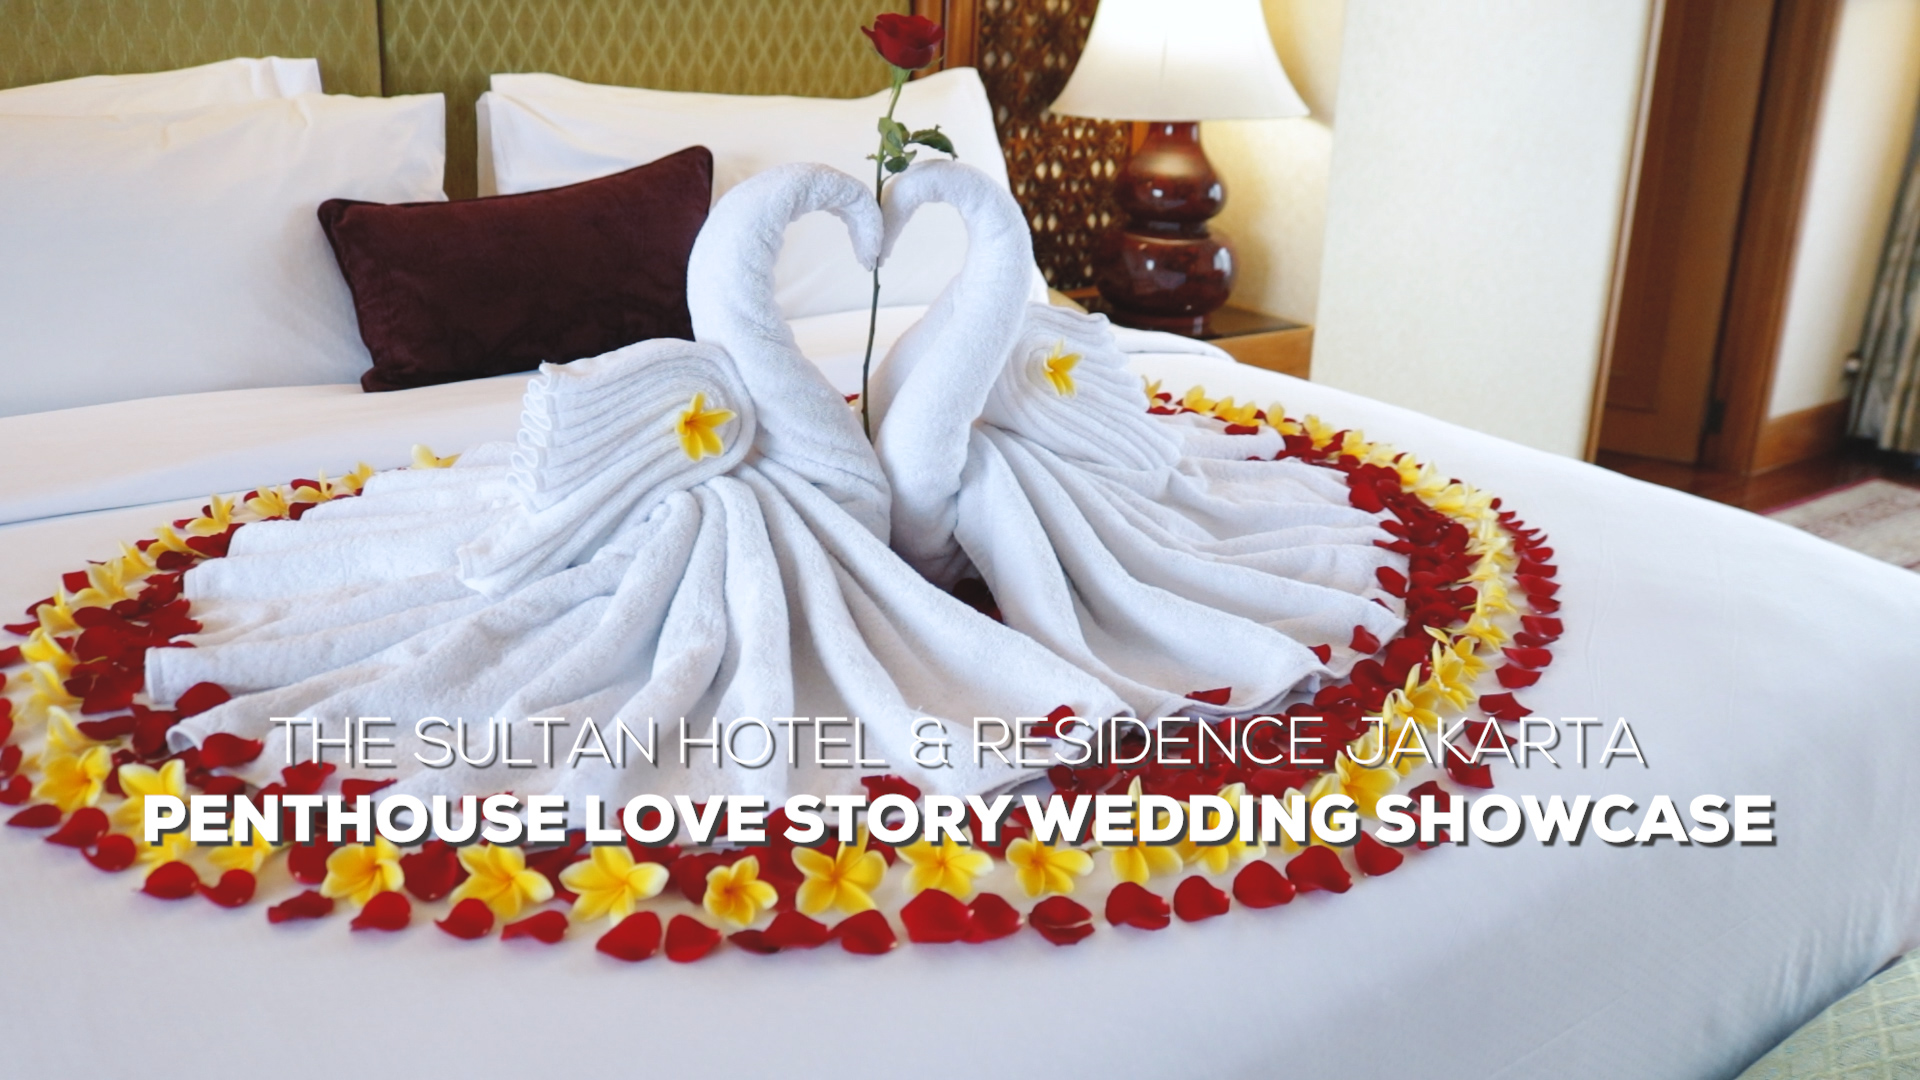 The Sultan Hotel & Residence Jakarta Penthouse Love Story Wedding Showcase